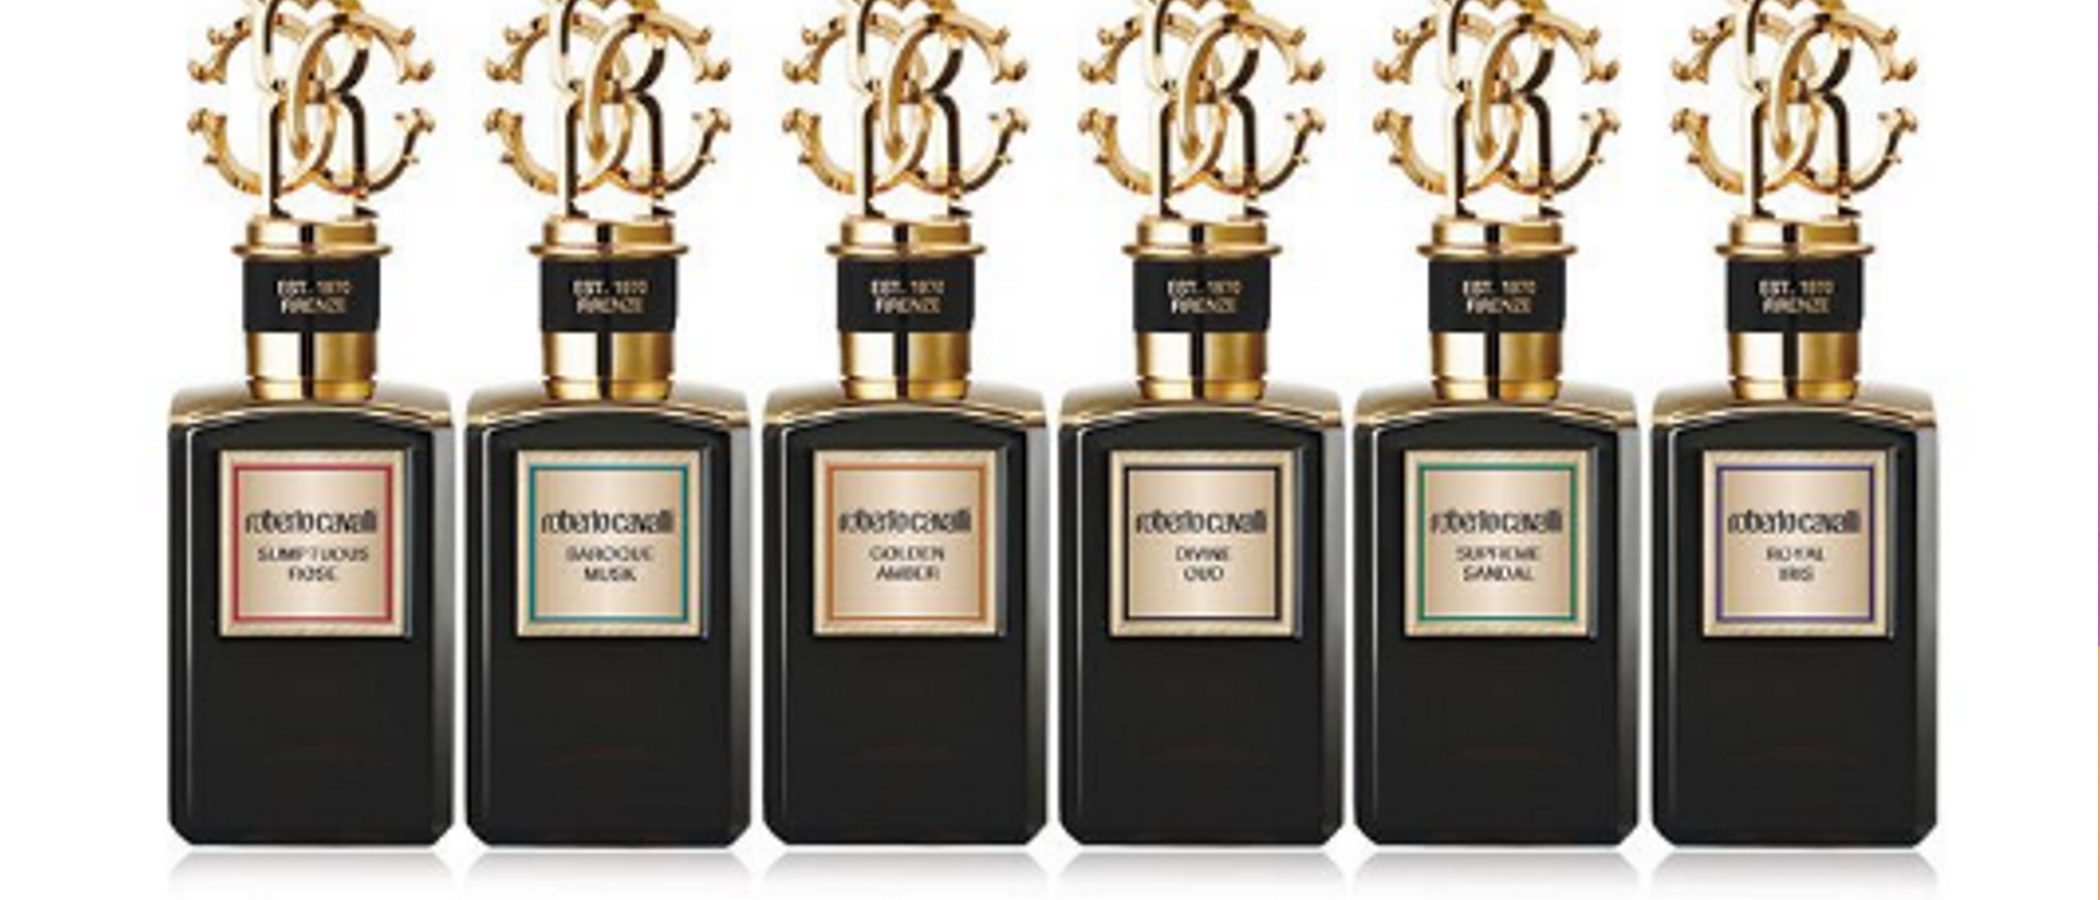 Roberto Cavalli derrocha elegancia con 'Roberto Cavalli Gold Collection'